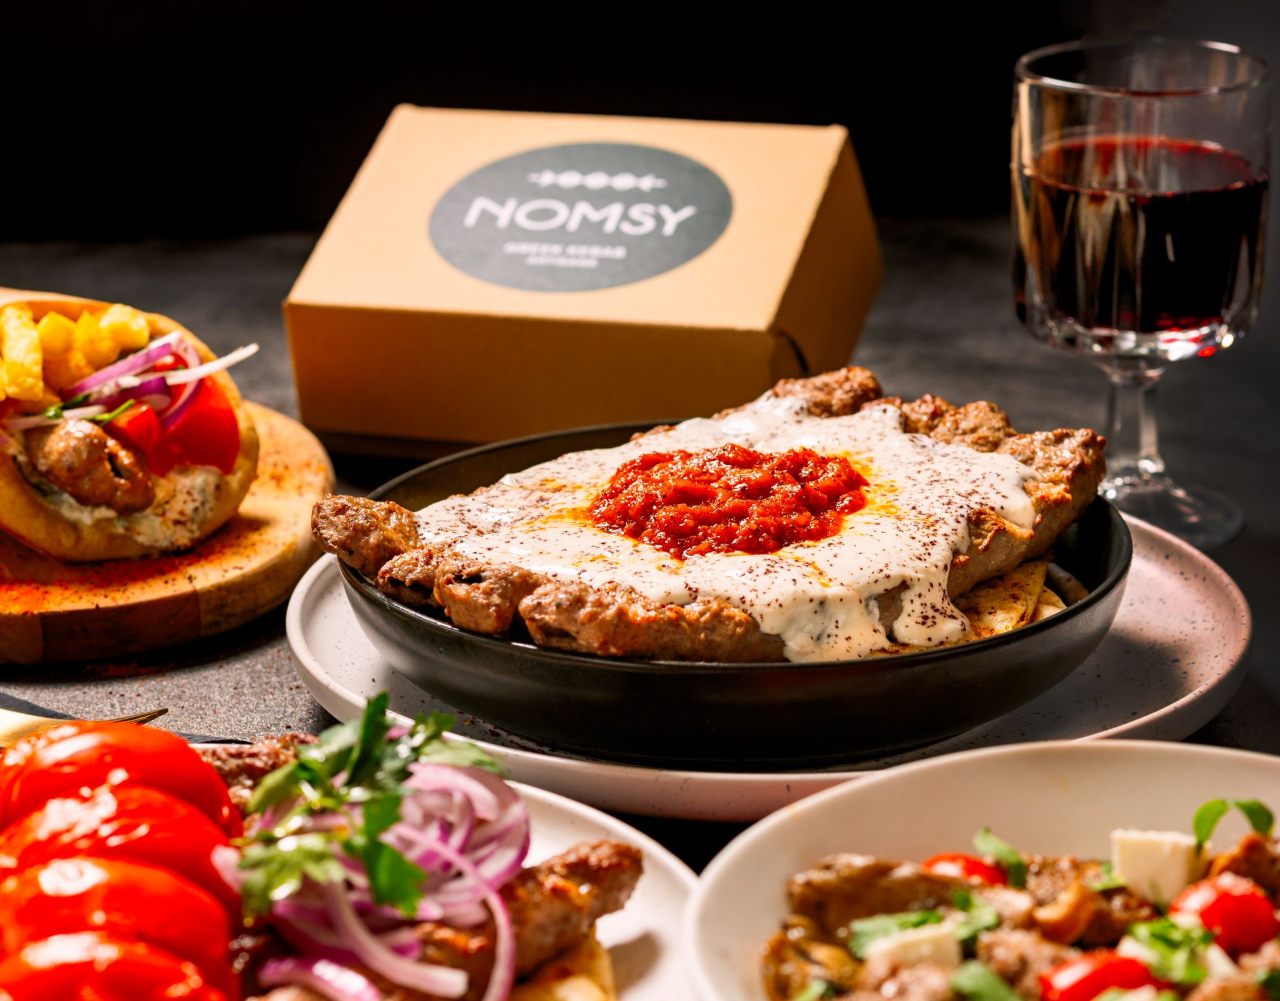 Nomsy Kebab: Το διάσημο κεμπάπ του Θανάση ήρθε στη Γλυφάδα και κάνει το πιο λαχταριστό delivery